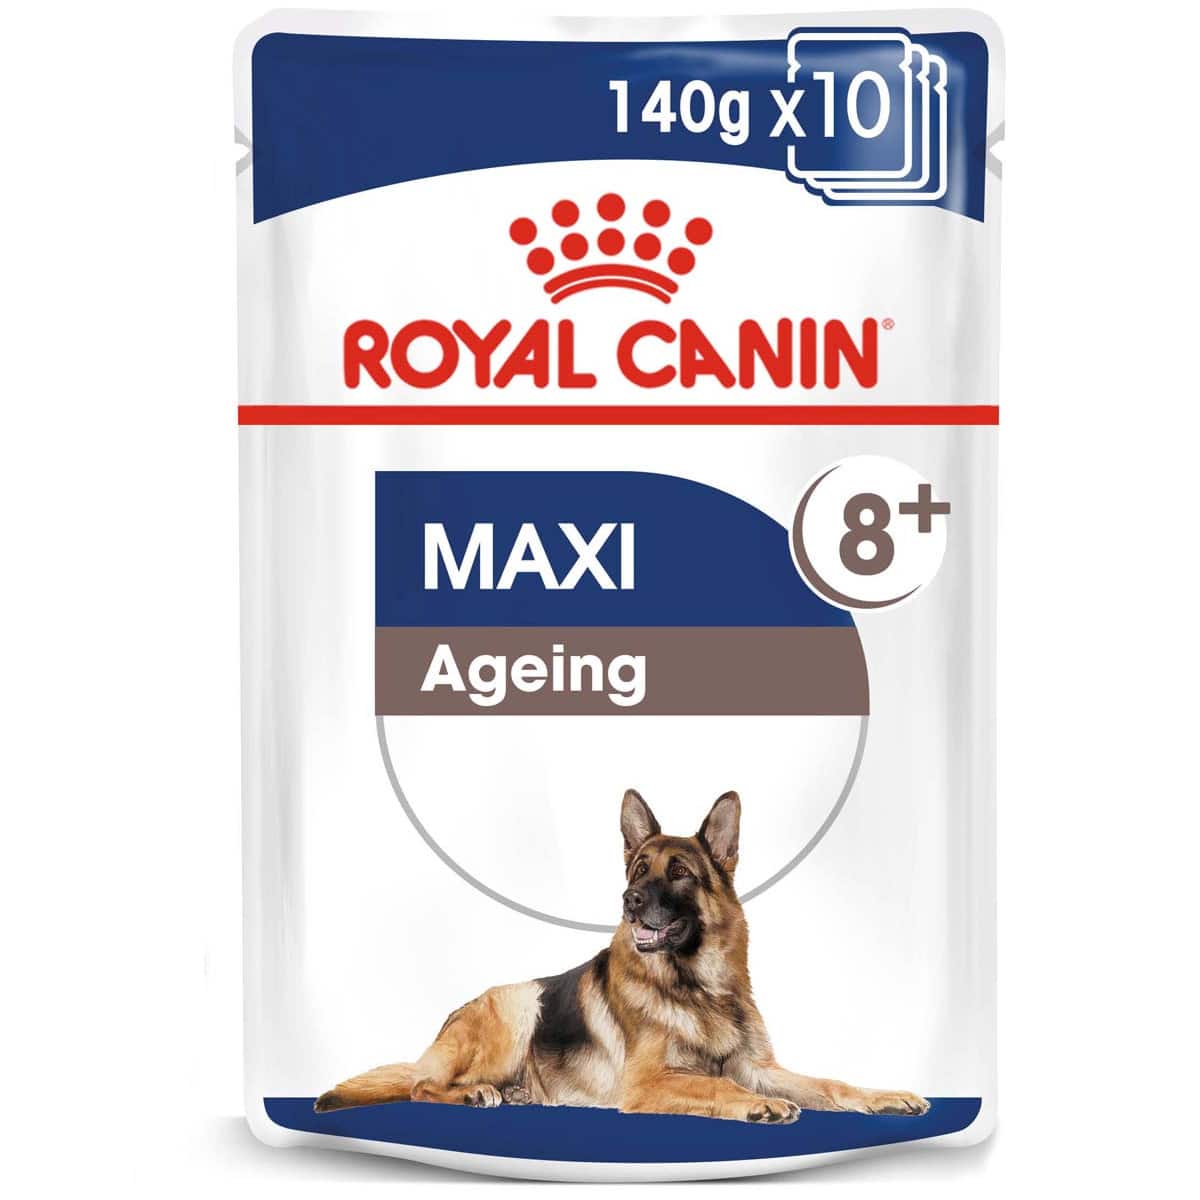 ROYAL CANIN MAXI Ageing 8+ Nassfutter für ältere große Hunde 20x140g